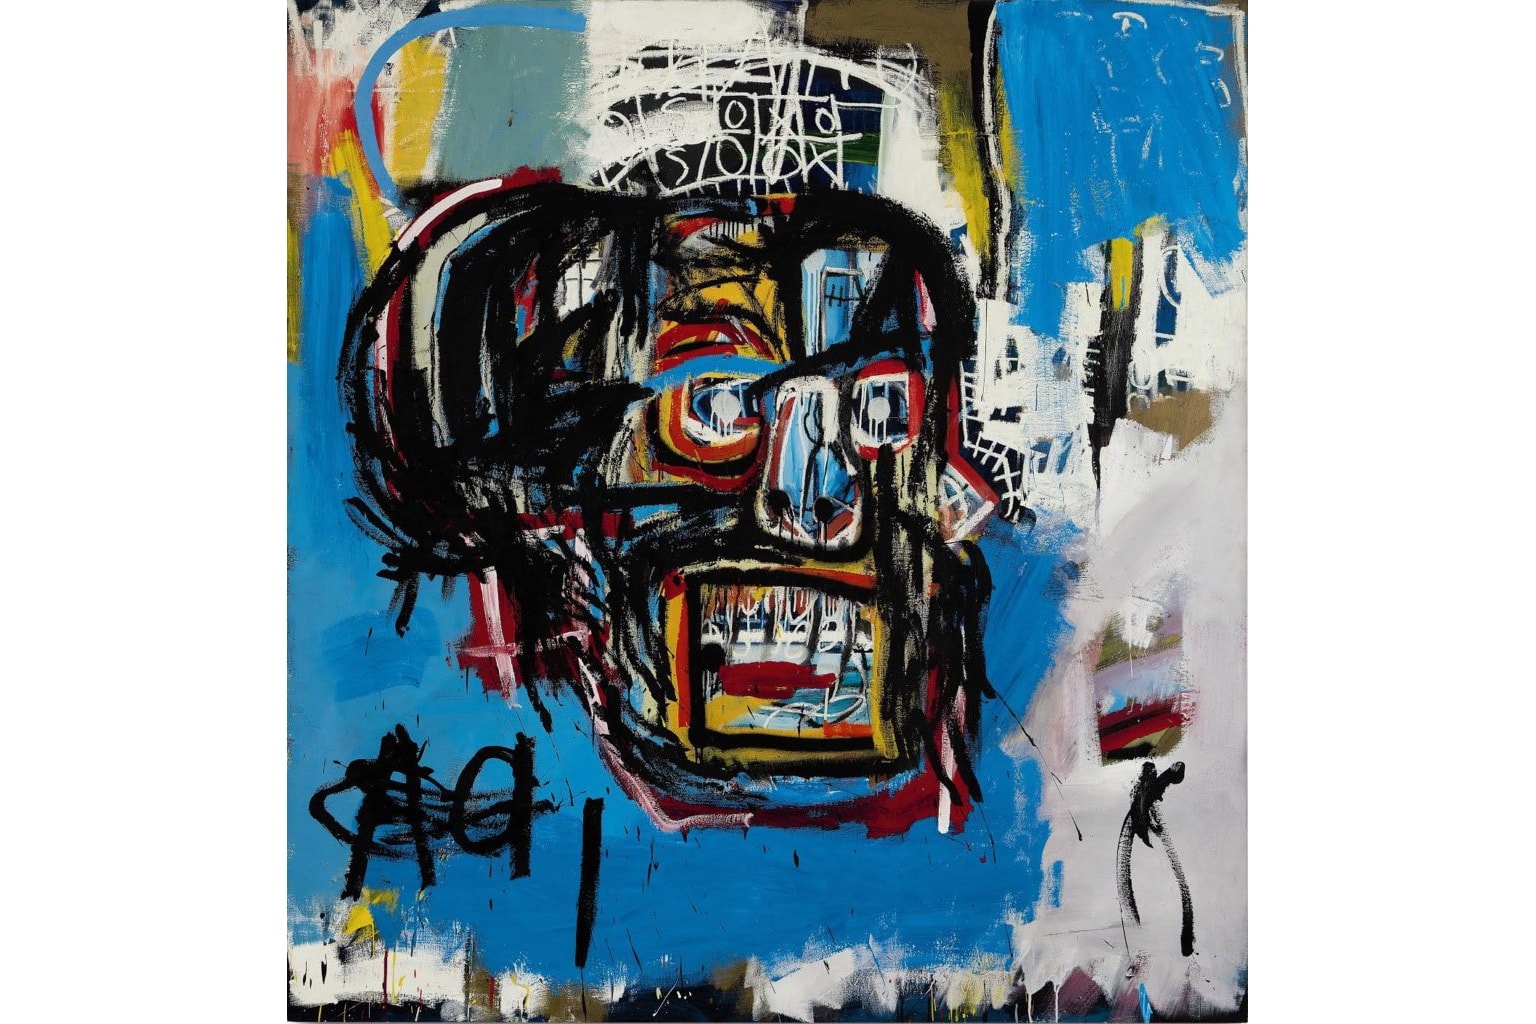 Jean-Michel Basquiat J.W. Anderson Robert Mapplethorpe George Condo Harvey Milk Photo Center ShutterSpeed Artwork Exhibitions Paintings Shows Art